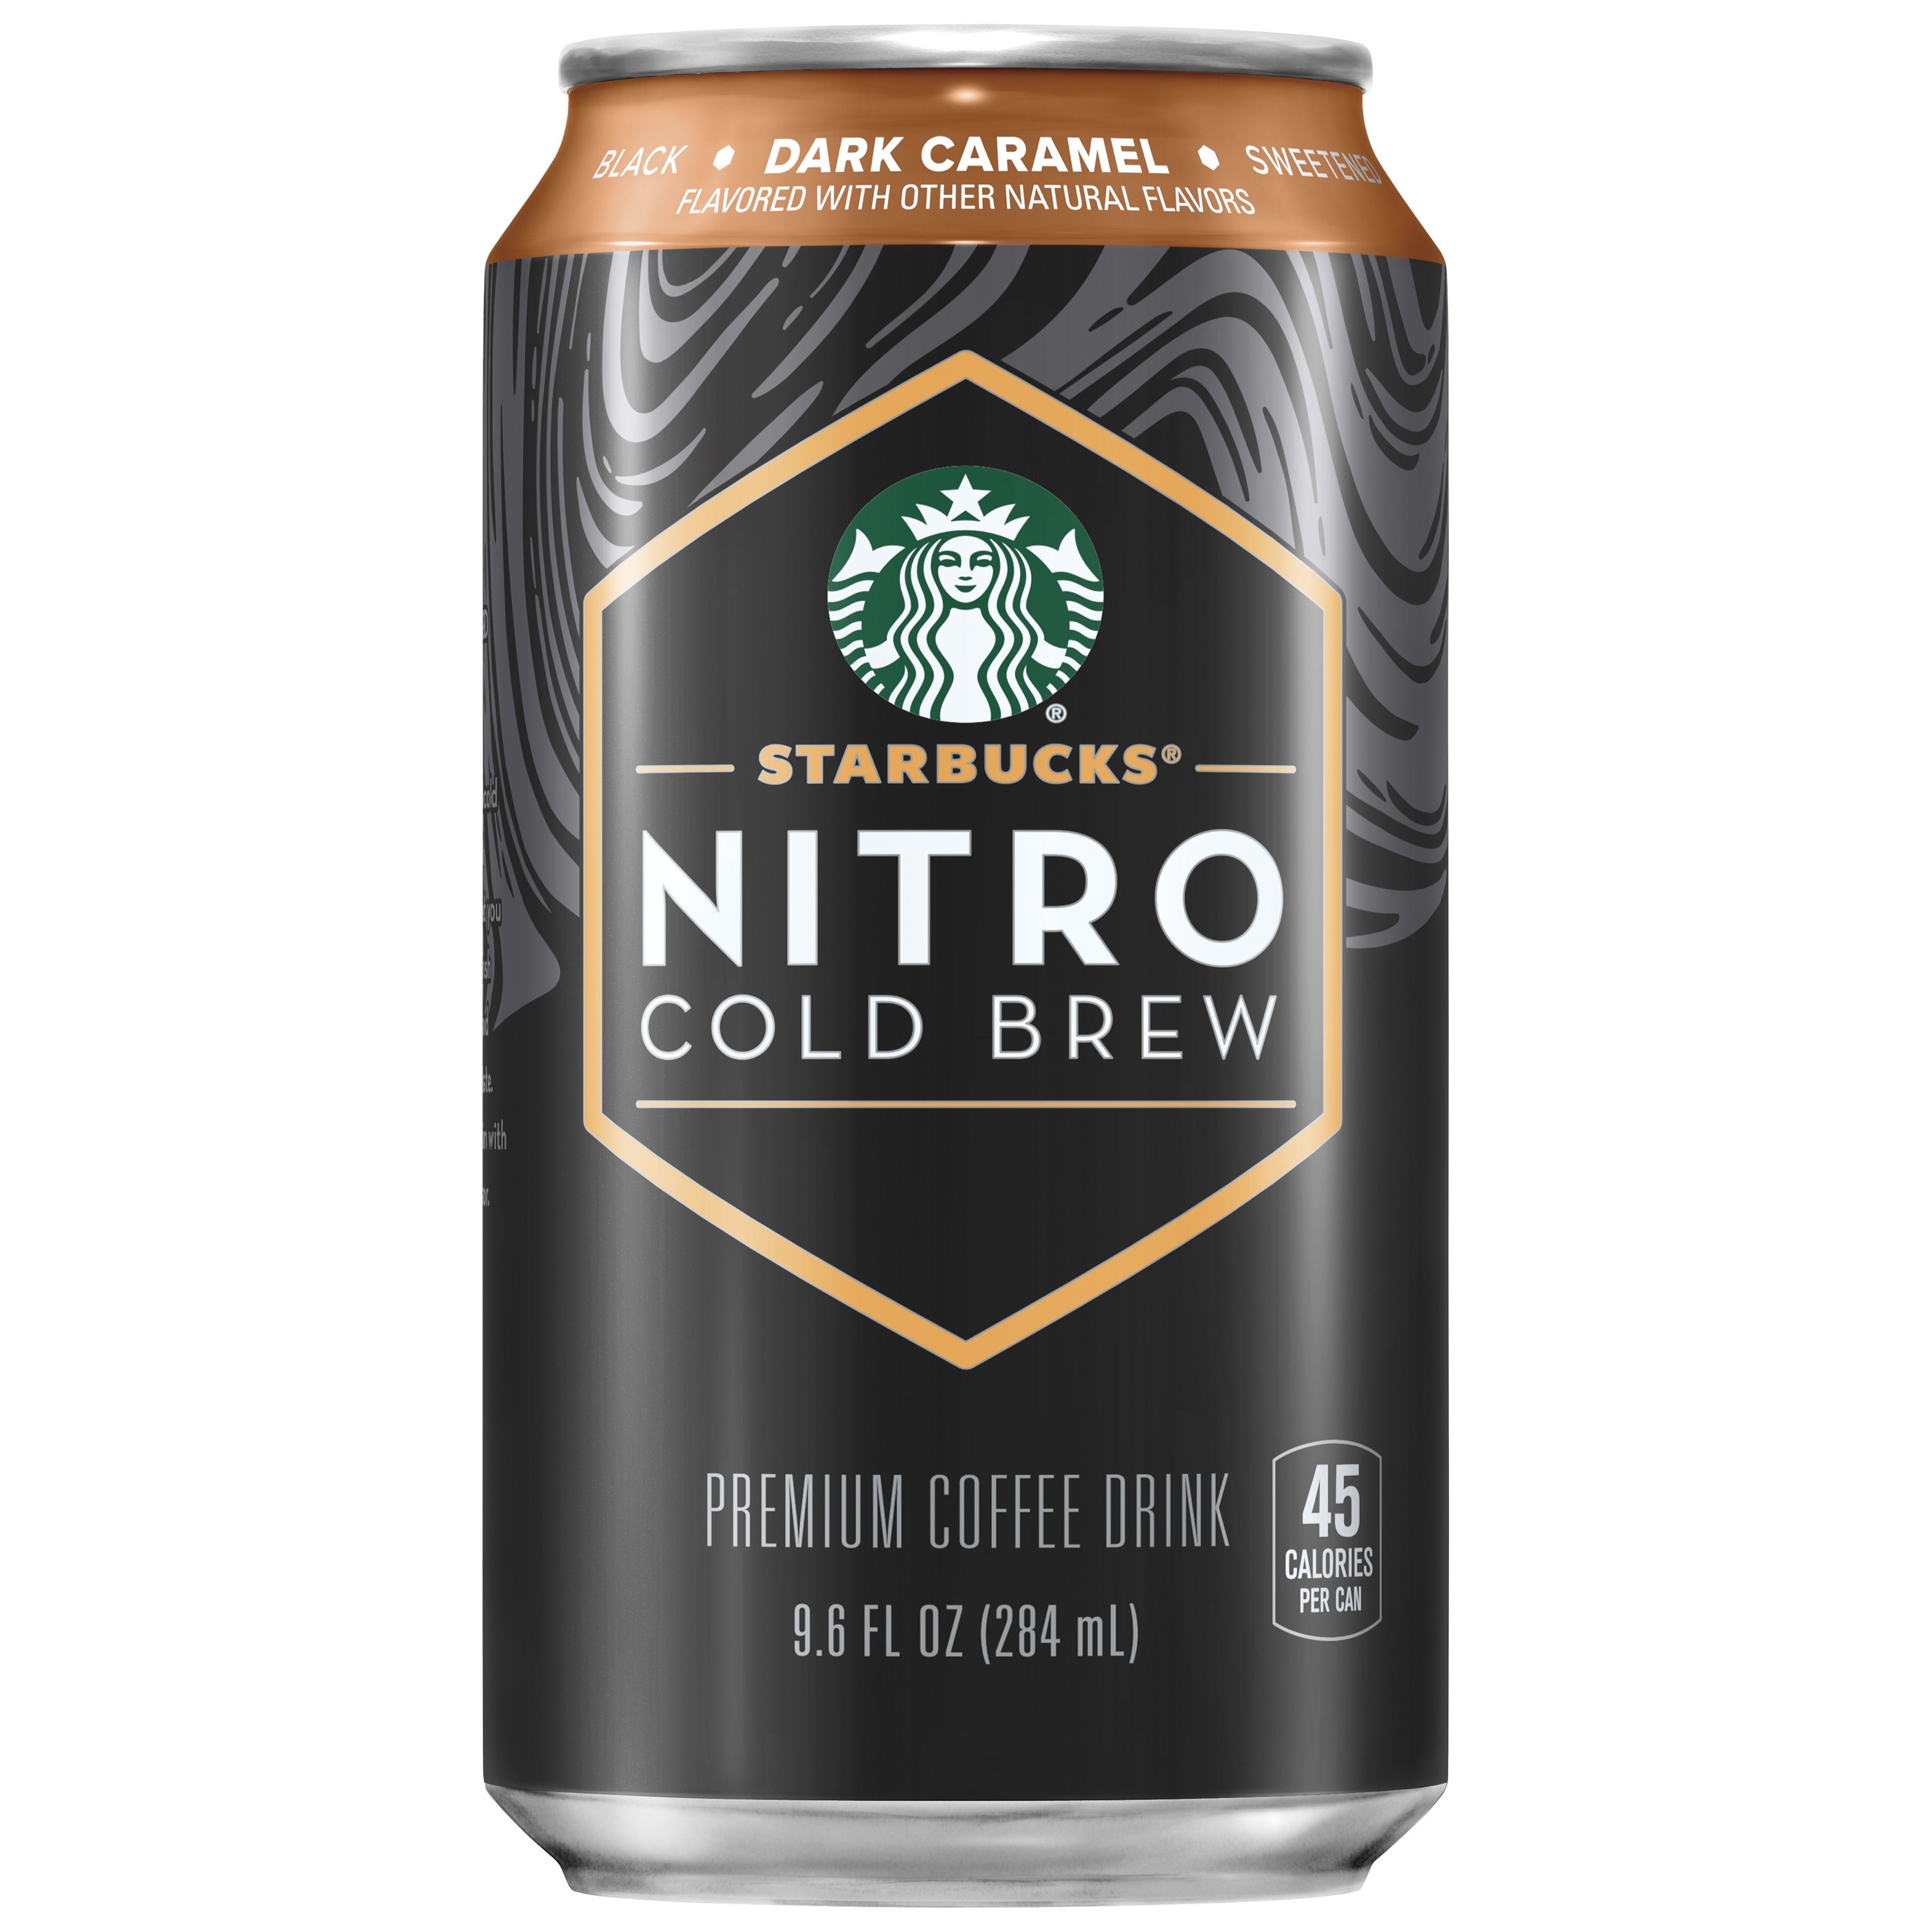 Starbucks Nitro Cold Brew Black Dark Caramel Premium Iced Coffee Drink, 9.6 oz 8 Pack Cans - image 1 of 7